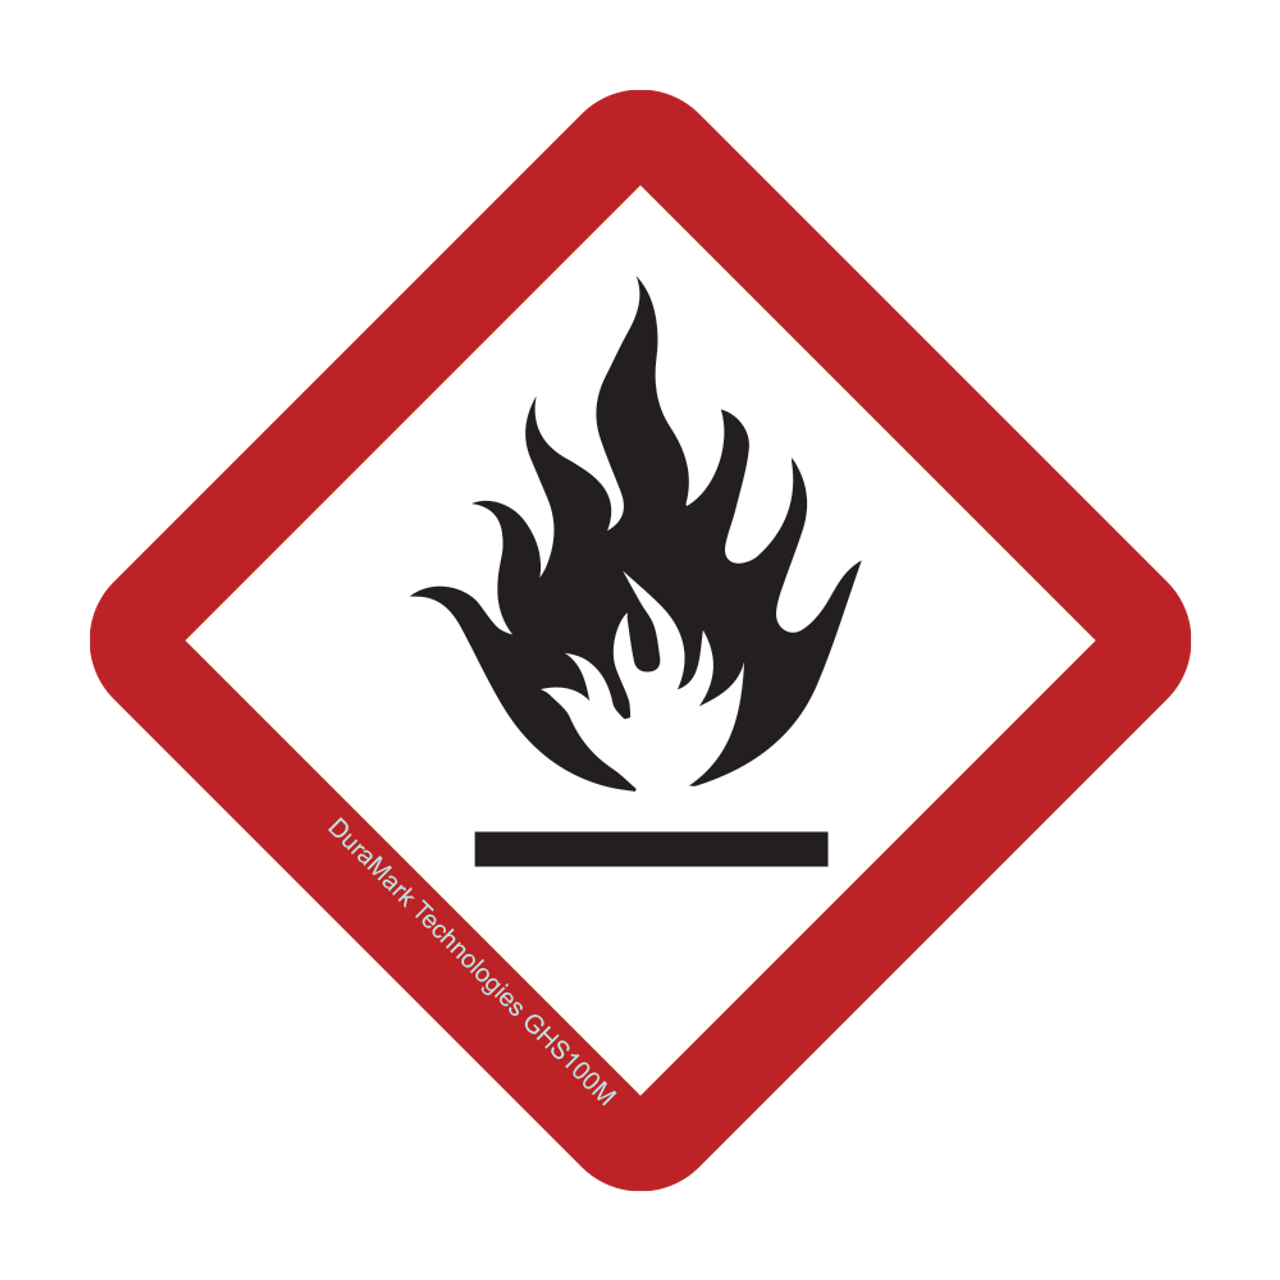 GHS Flame Symbol Label